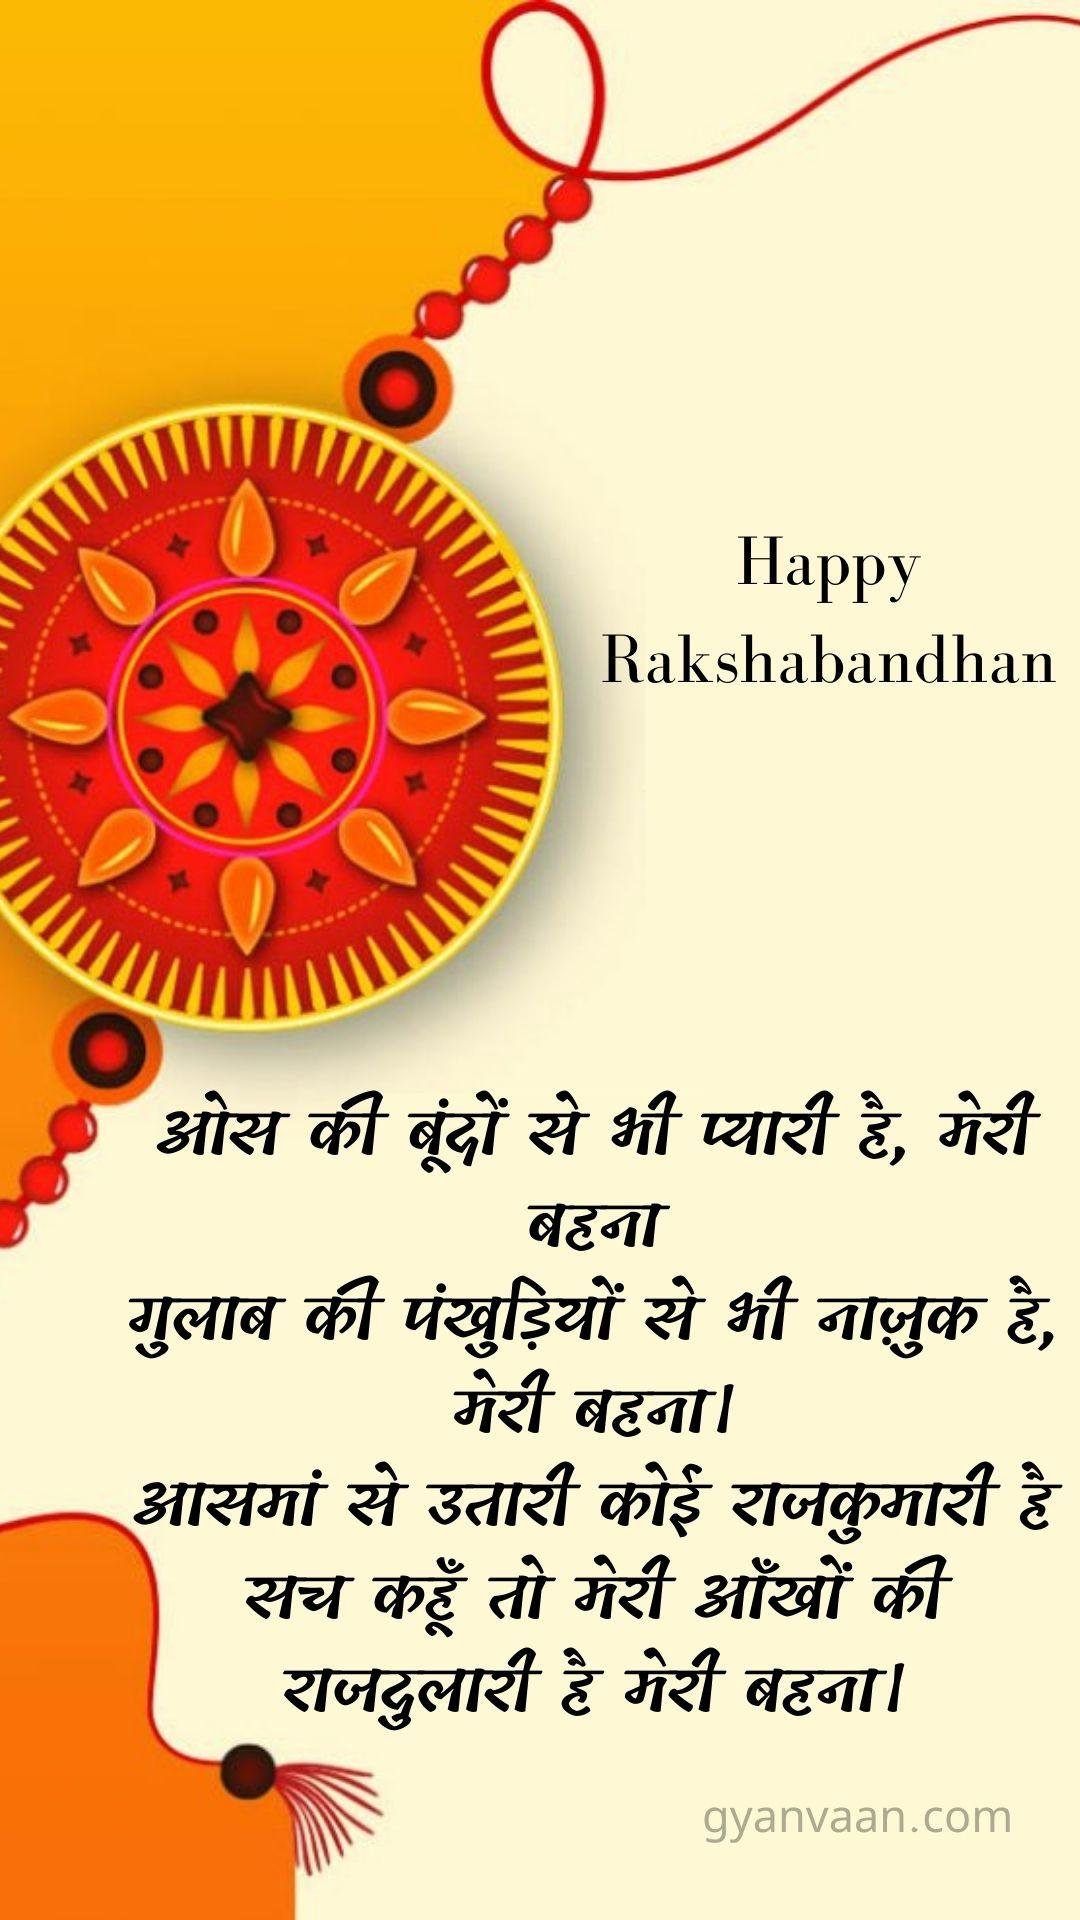 Raksha Bandhan Quotes Status Shayari And Wishes In Hindi For Mobile Devices 6 - Raksha Bandhan Quotes